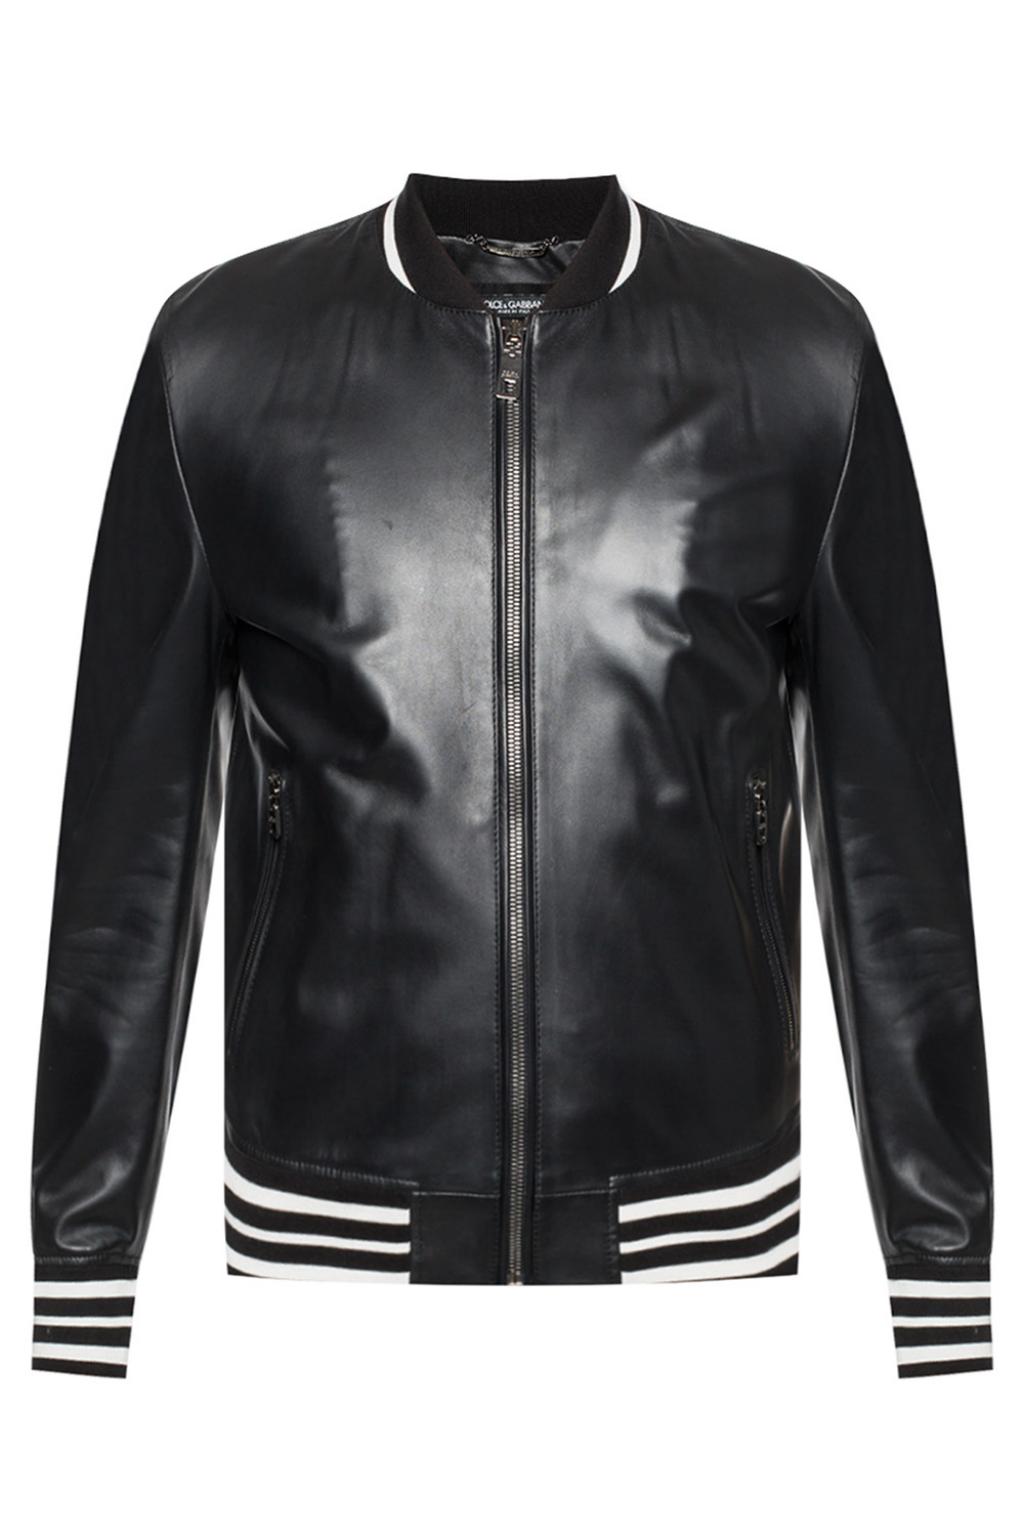 dolce and gabbana leather bomber jacket